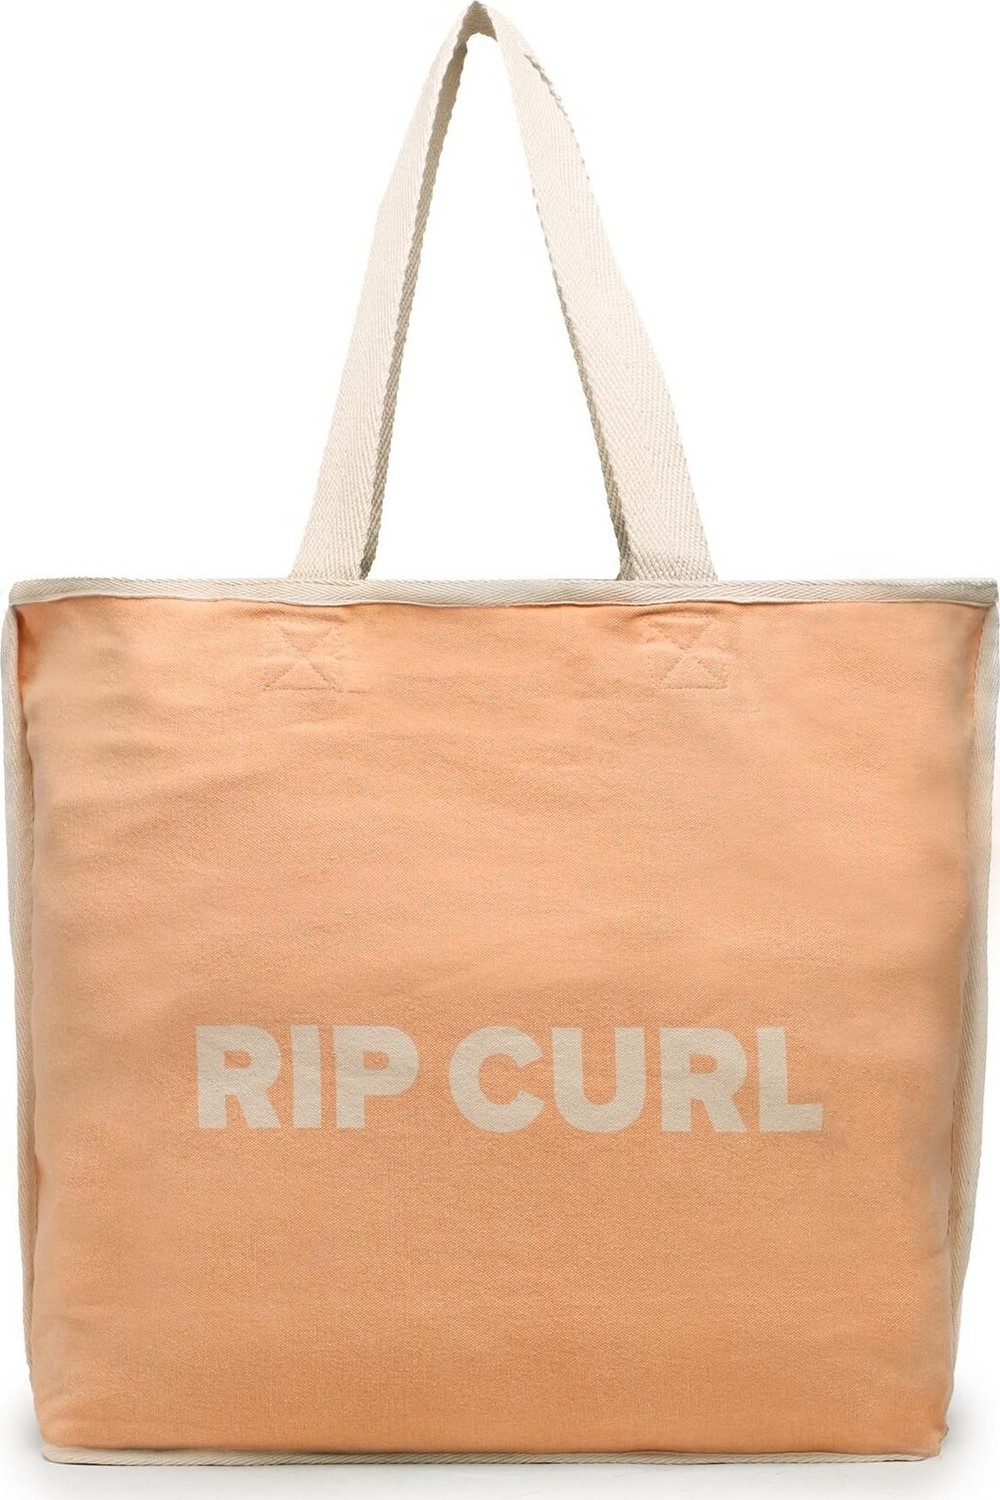 Kabelka Rip Curl Classic Surf 31l Tote Bag 001WSB Blush 0281